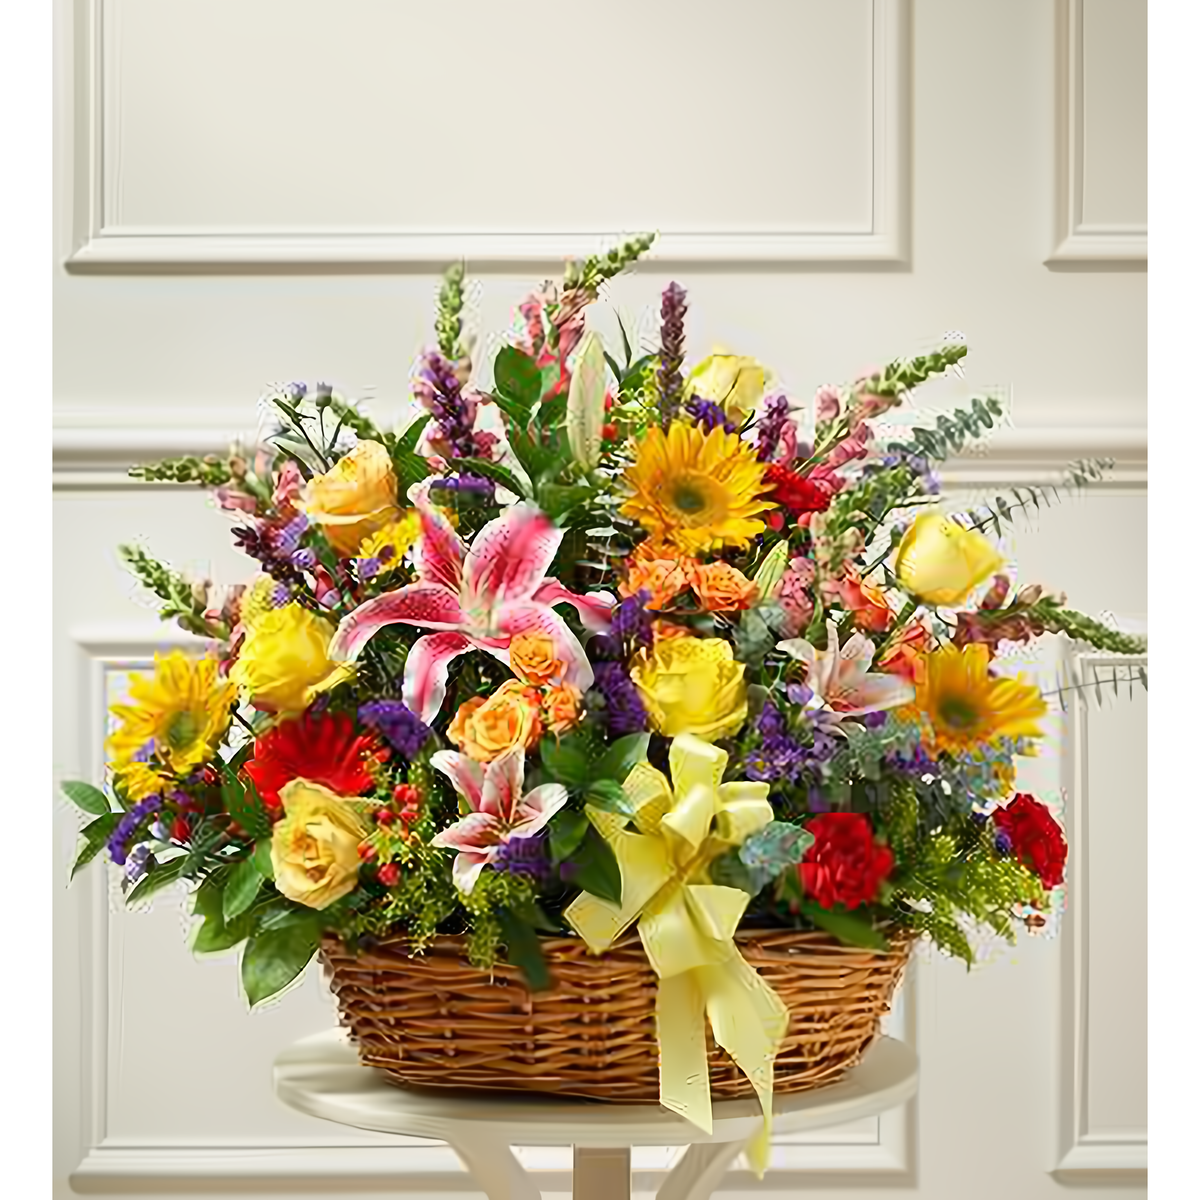 Manhattan Flower Delivery - Bright Flower Sympathy Arrangement in Basket - Funeral &gt; For the Service